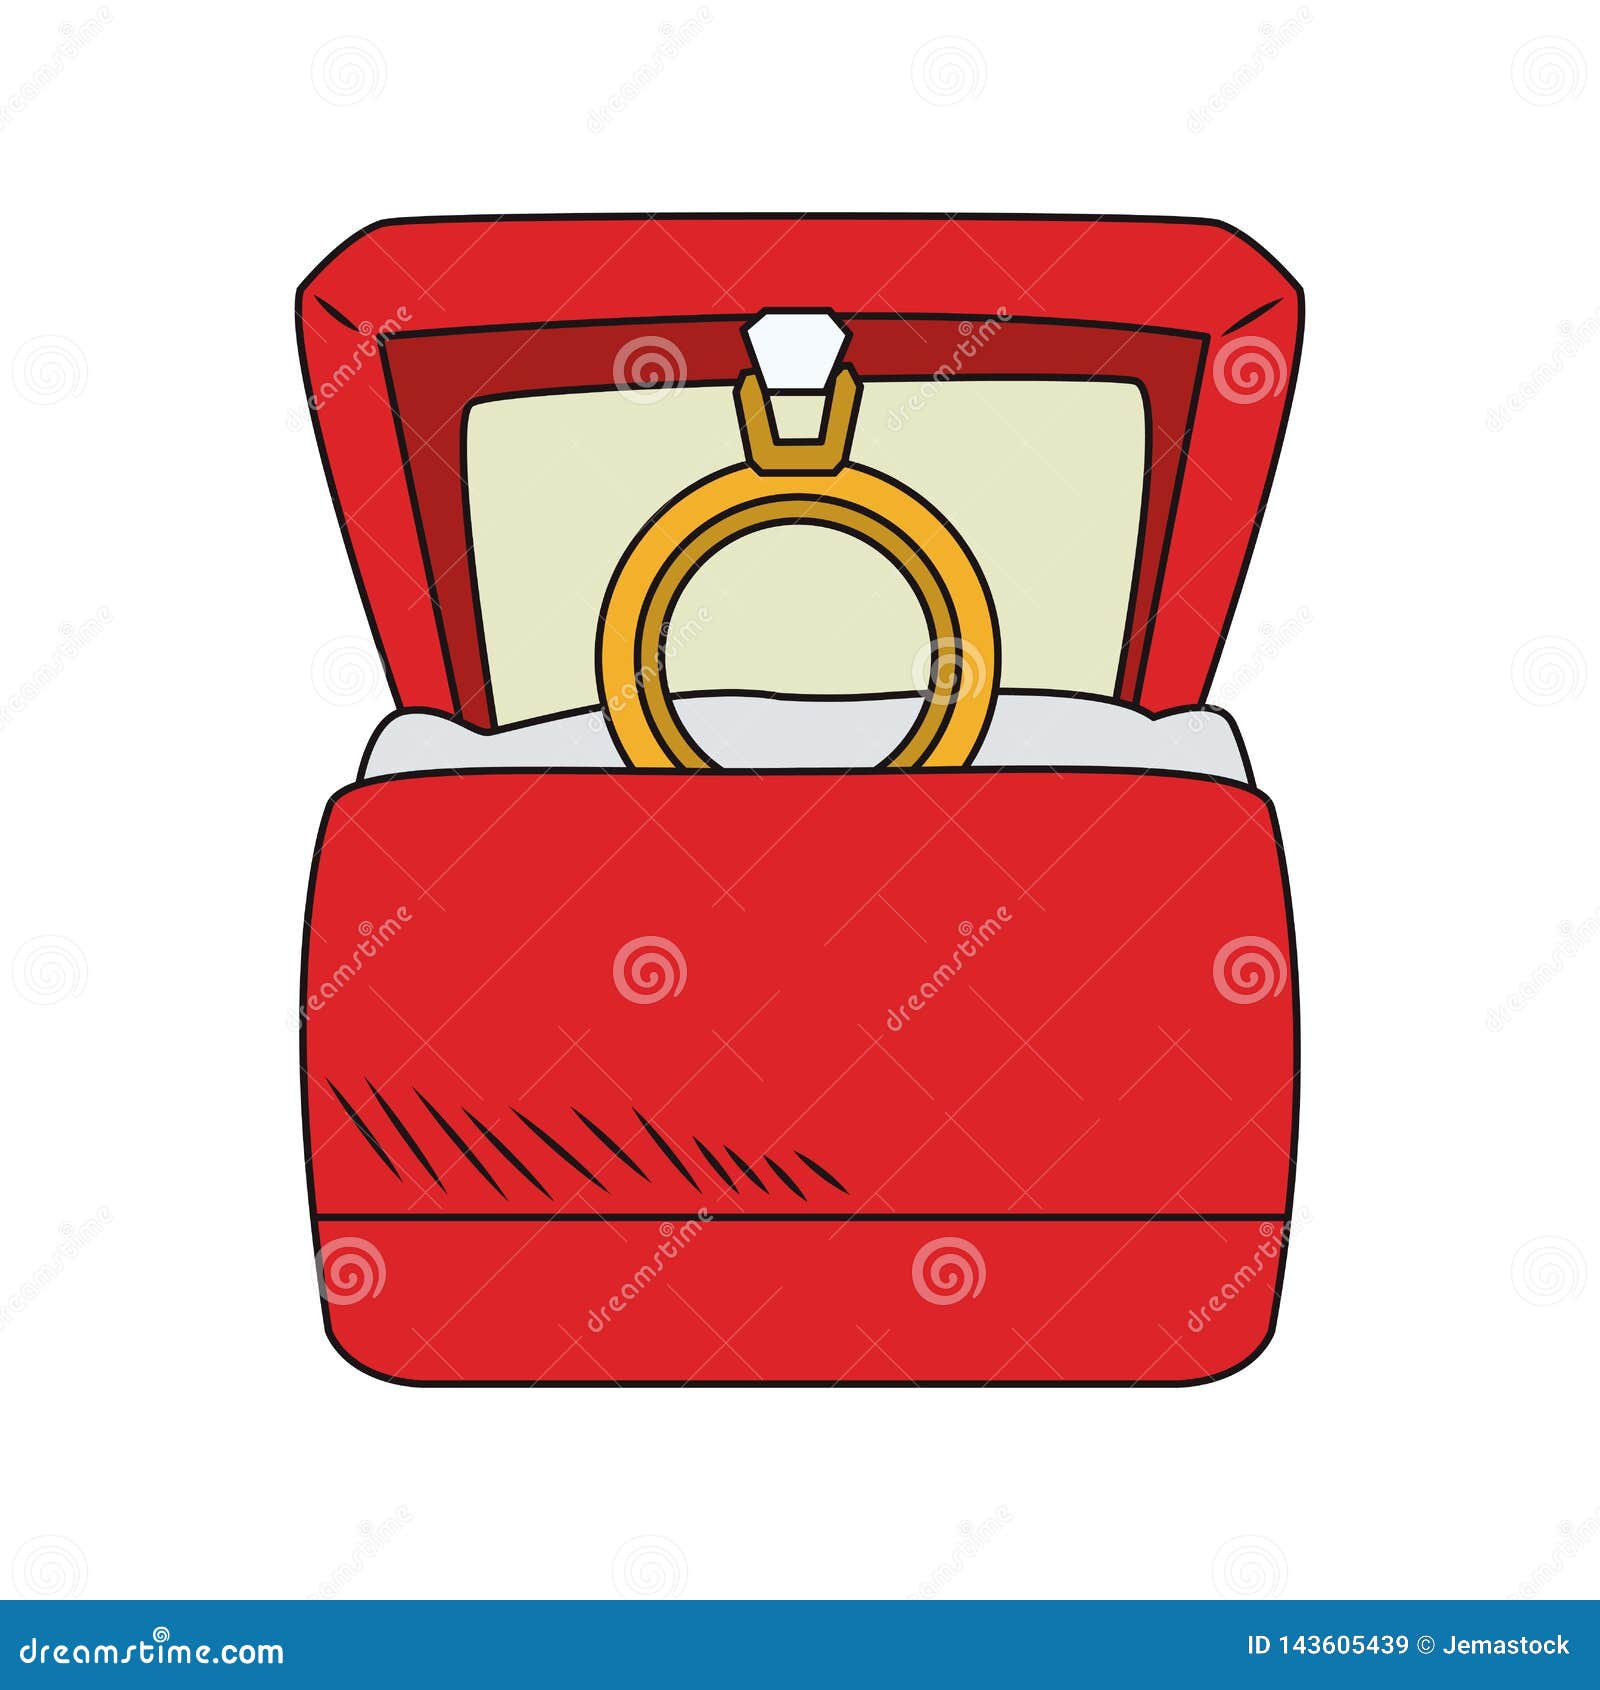 Wedding ring inside box stock vector. Illustration of ring - 143605439